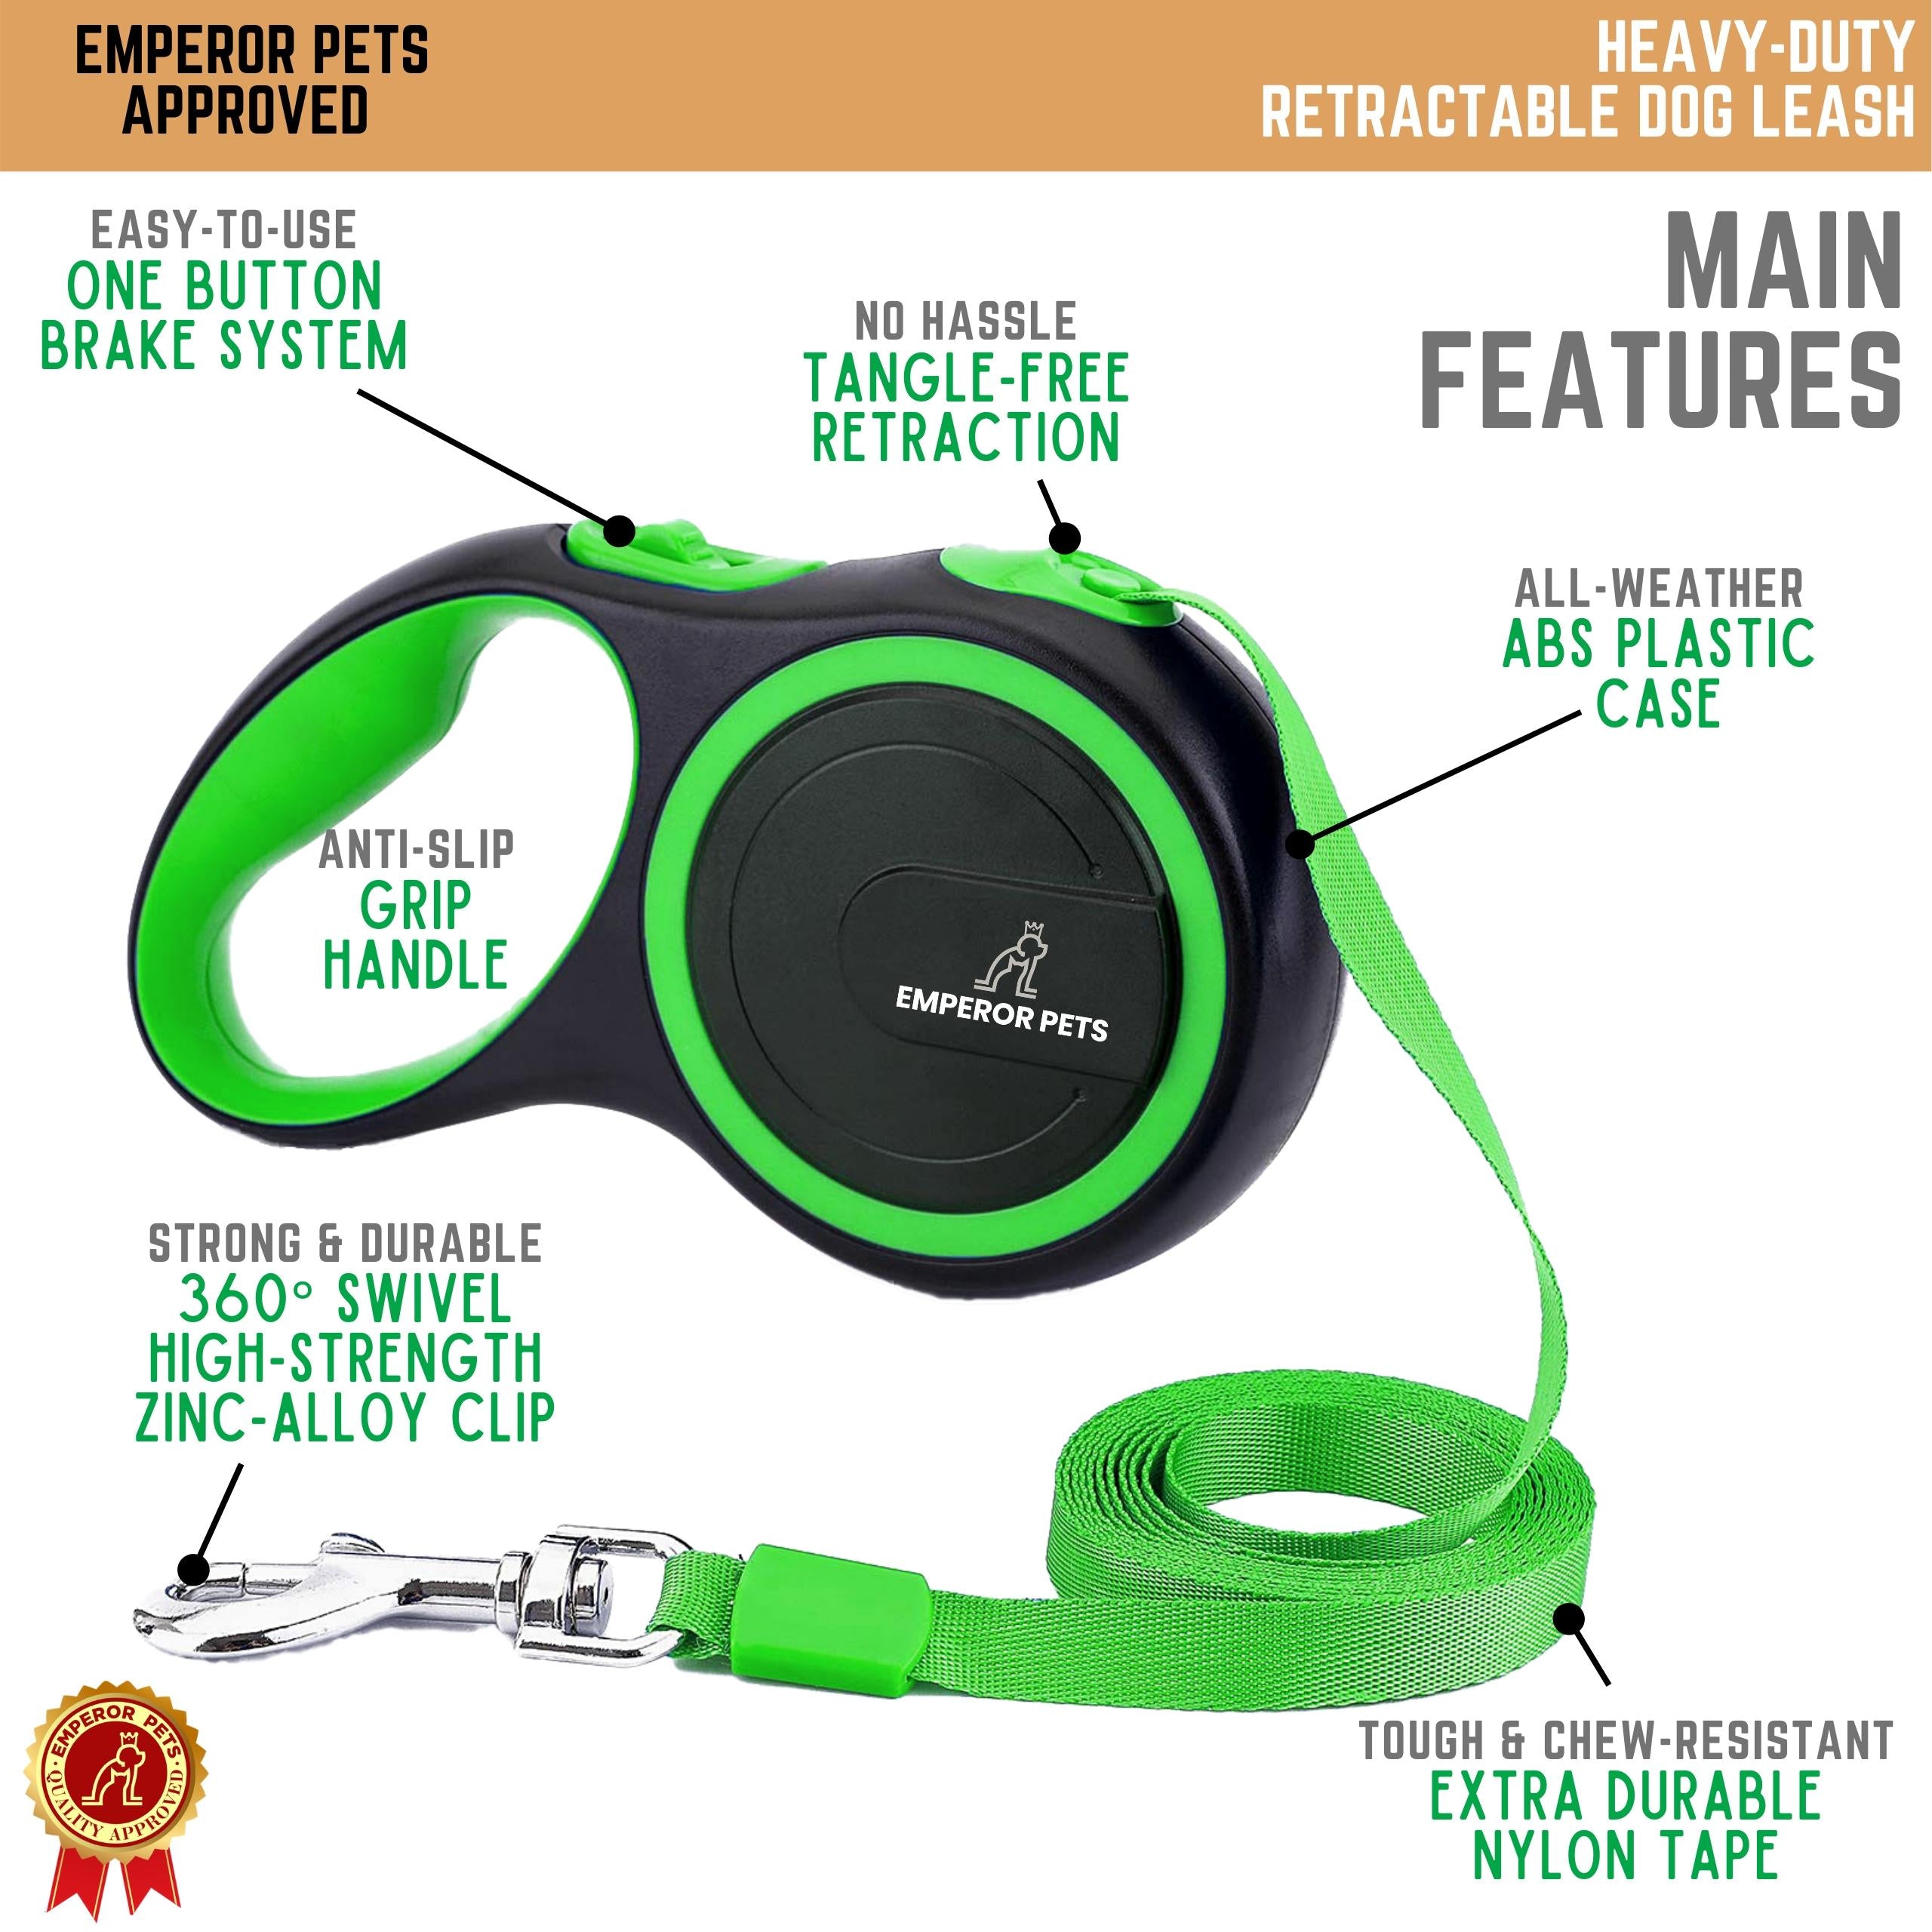 Emperor Pets Retractable Pet Leash Tape Length 16ft 5m Green Color, Durable Retractable Dog Leash - Image 4 Main Features